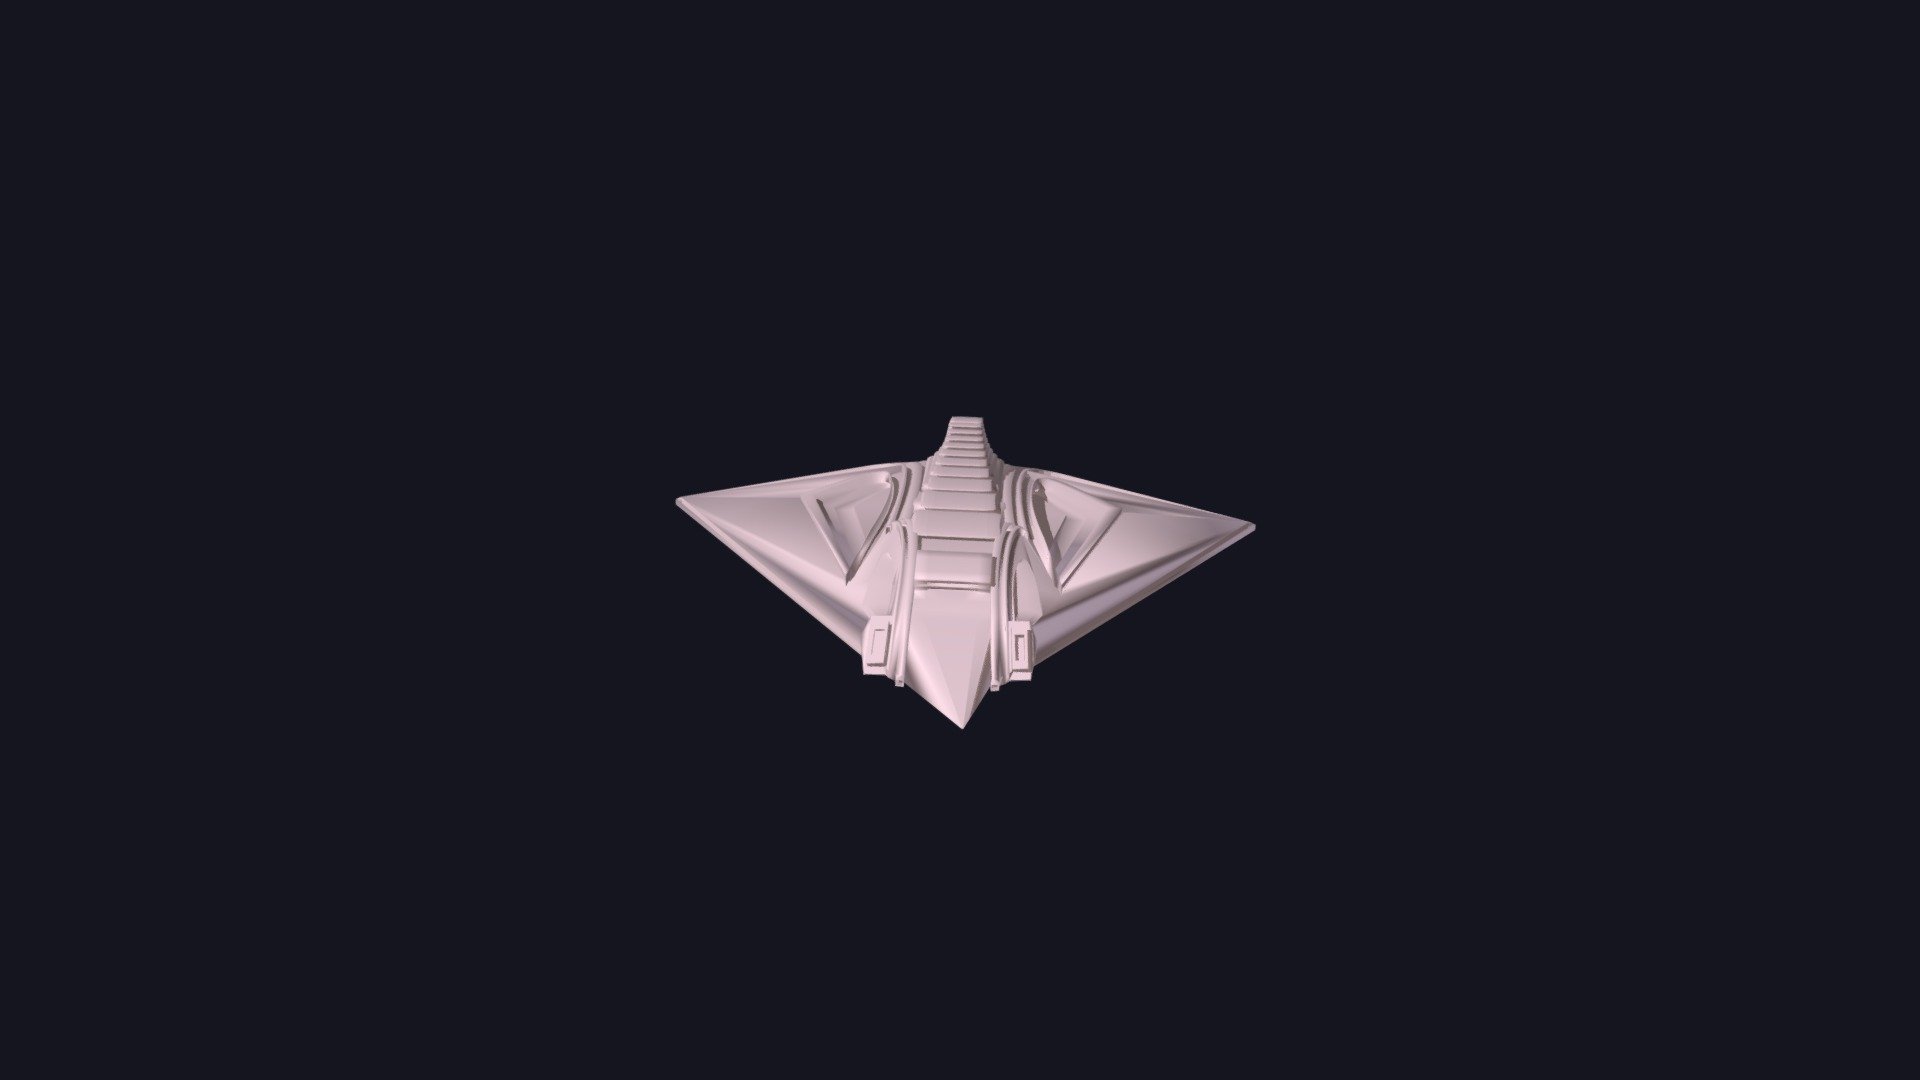 Spaceship Model